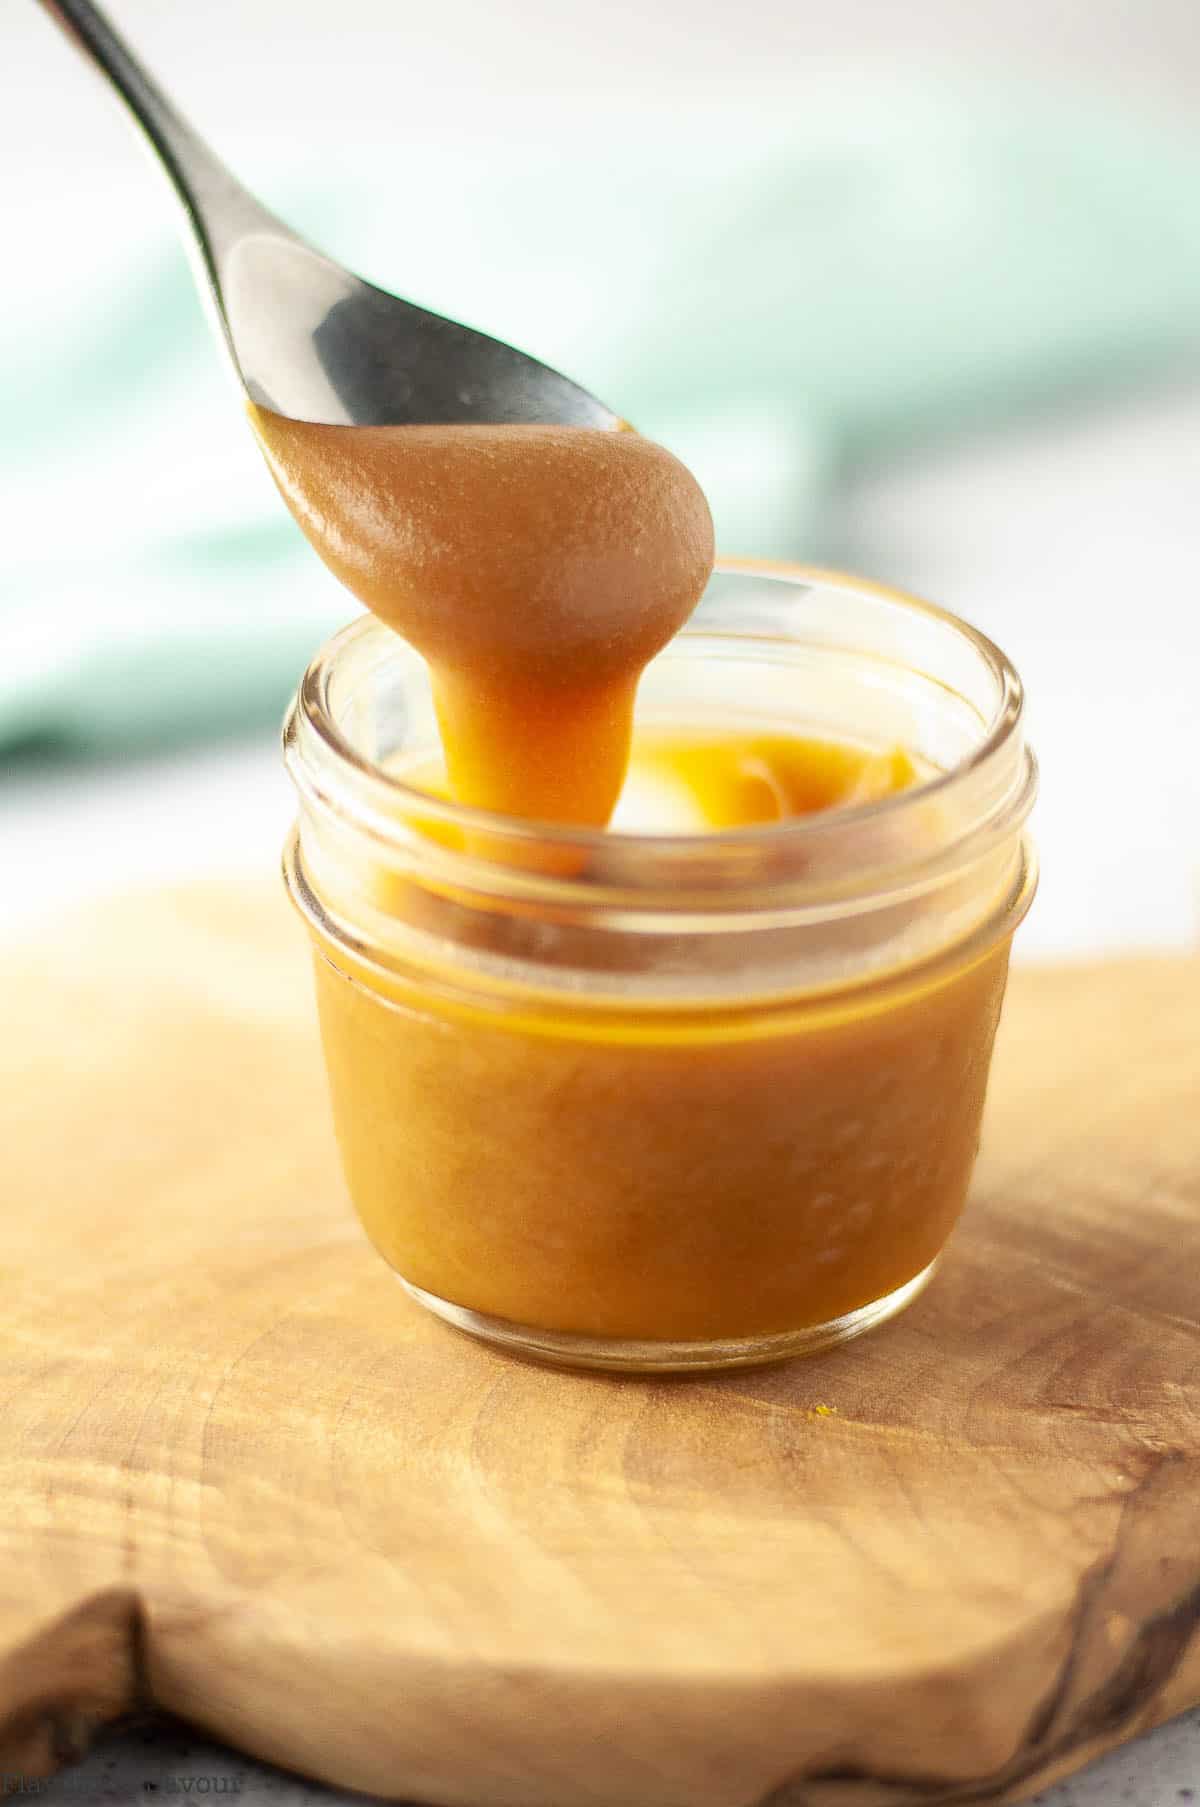 A spoonful of classic caramel sauce.